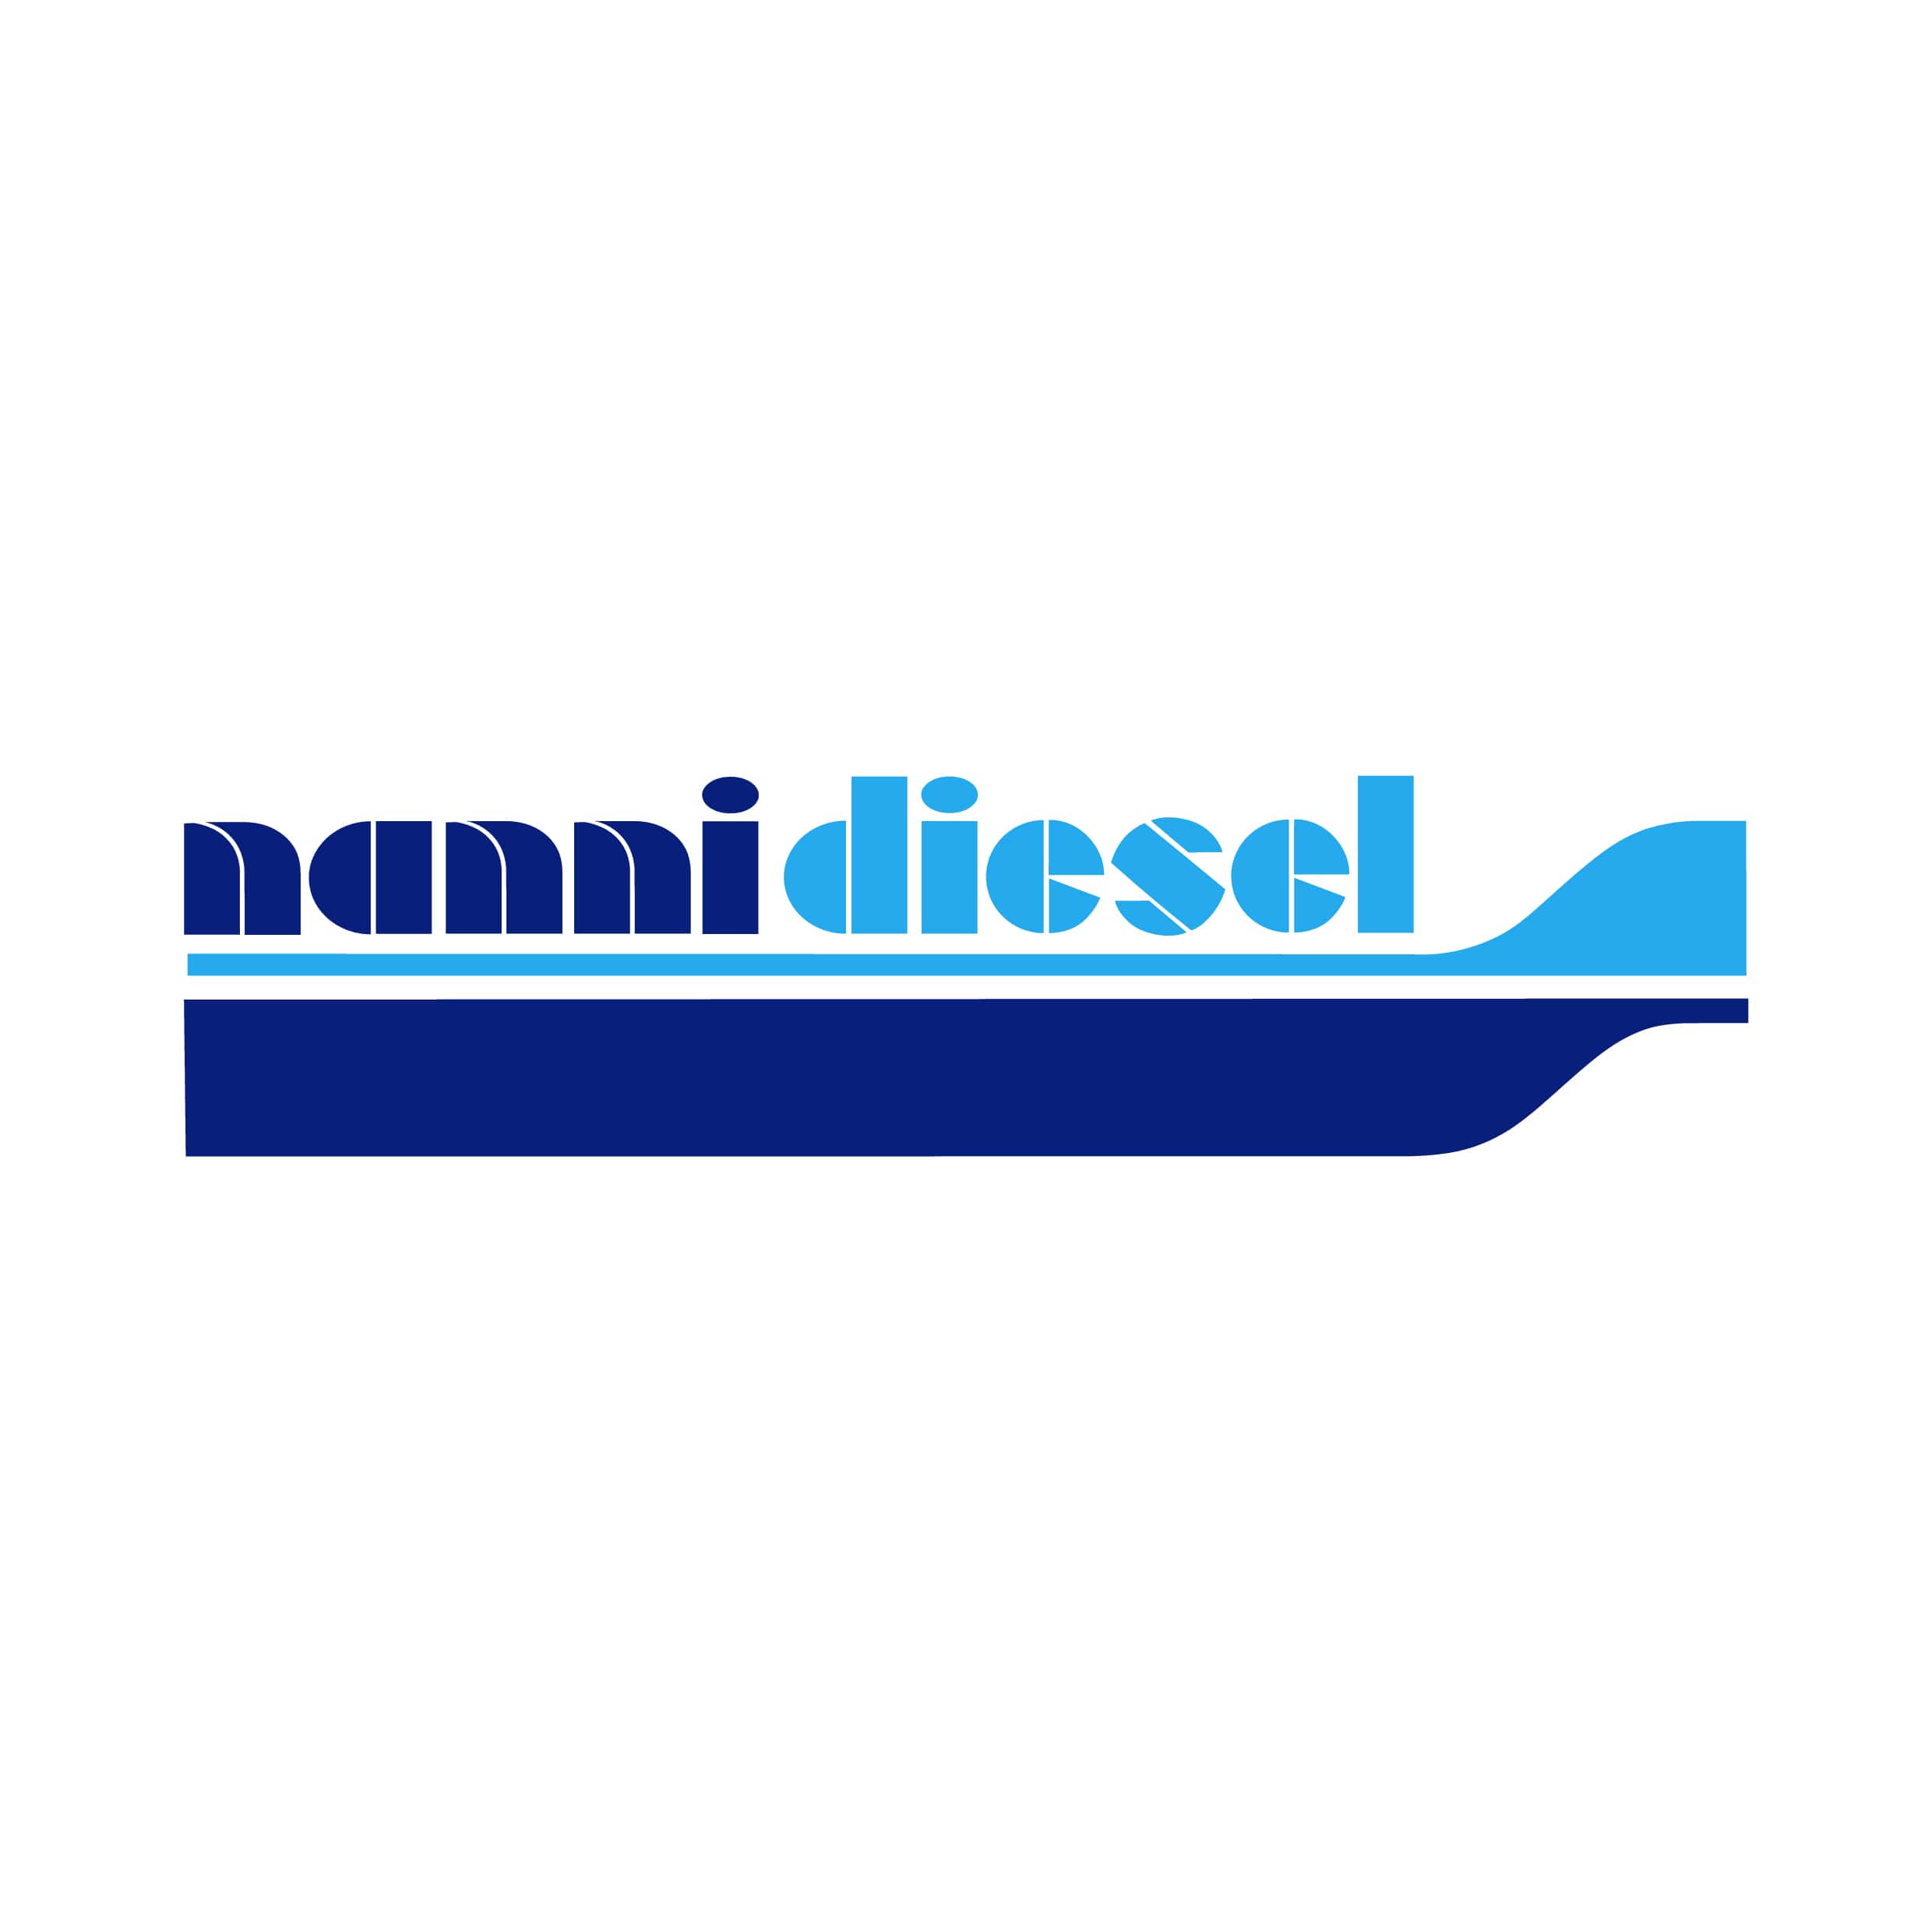 Nanni Diesel